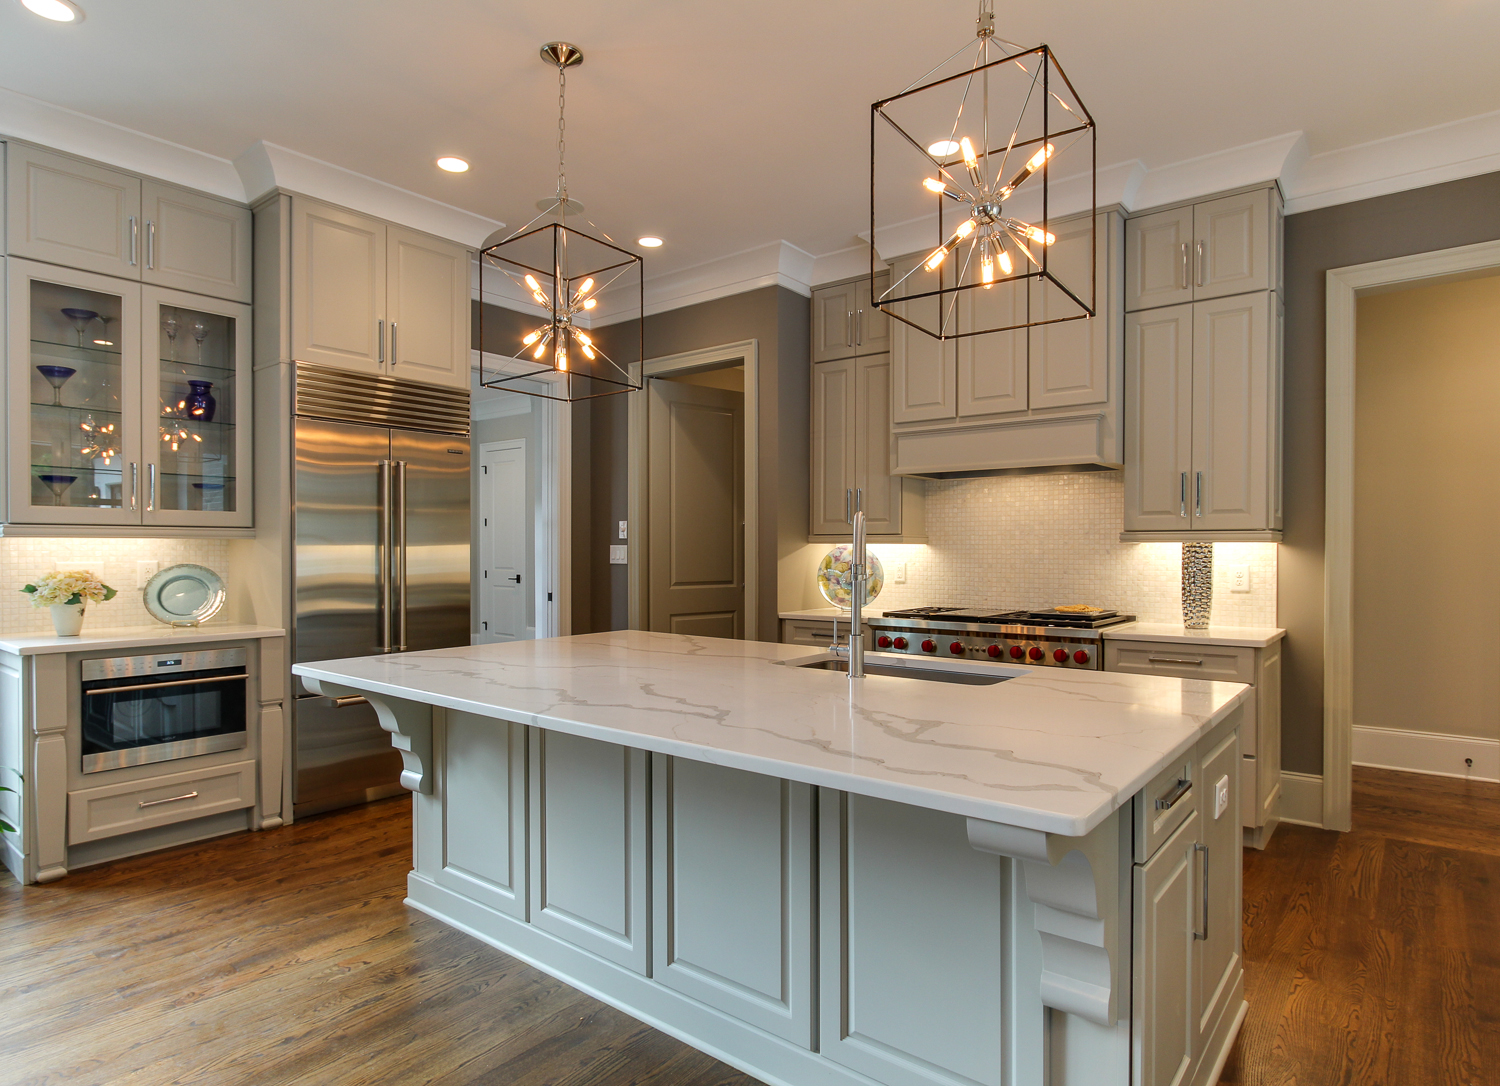  kitchen cabinetry design